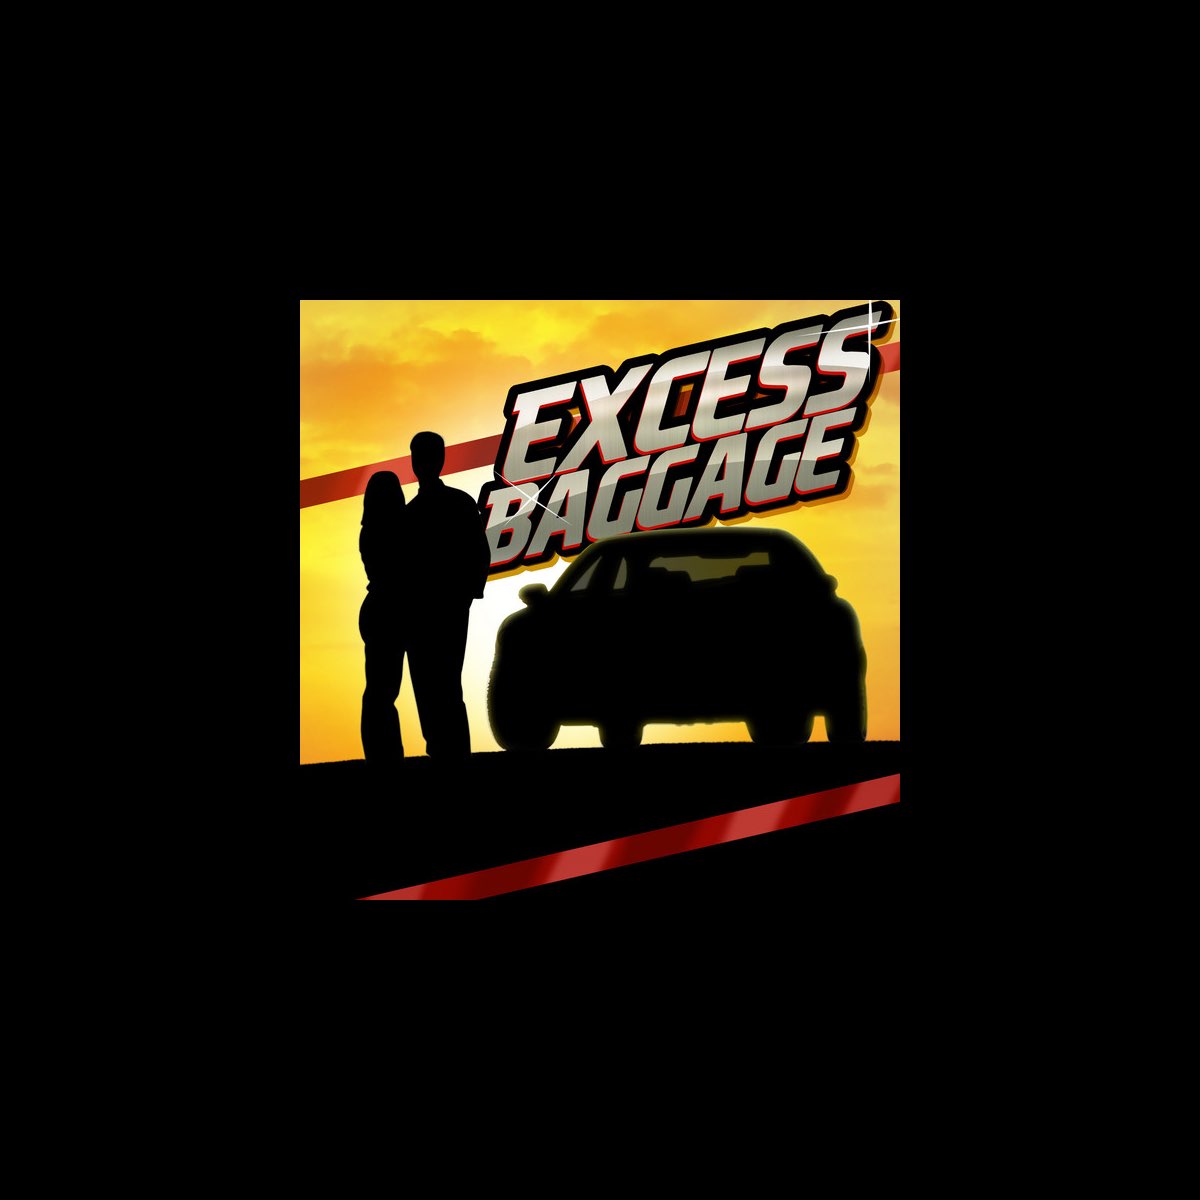 excess baggage movie car